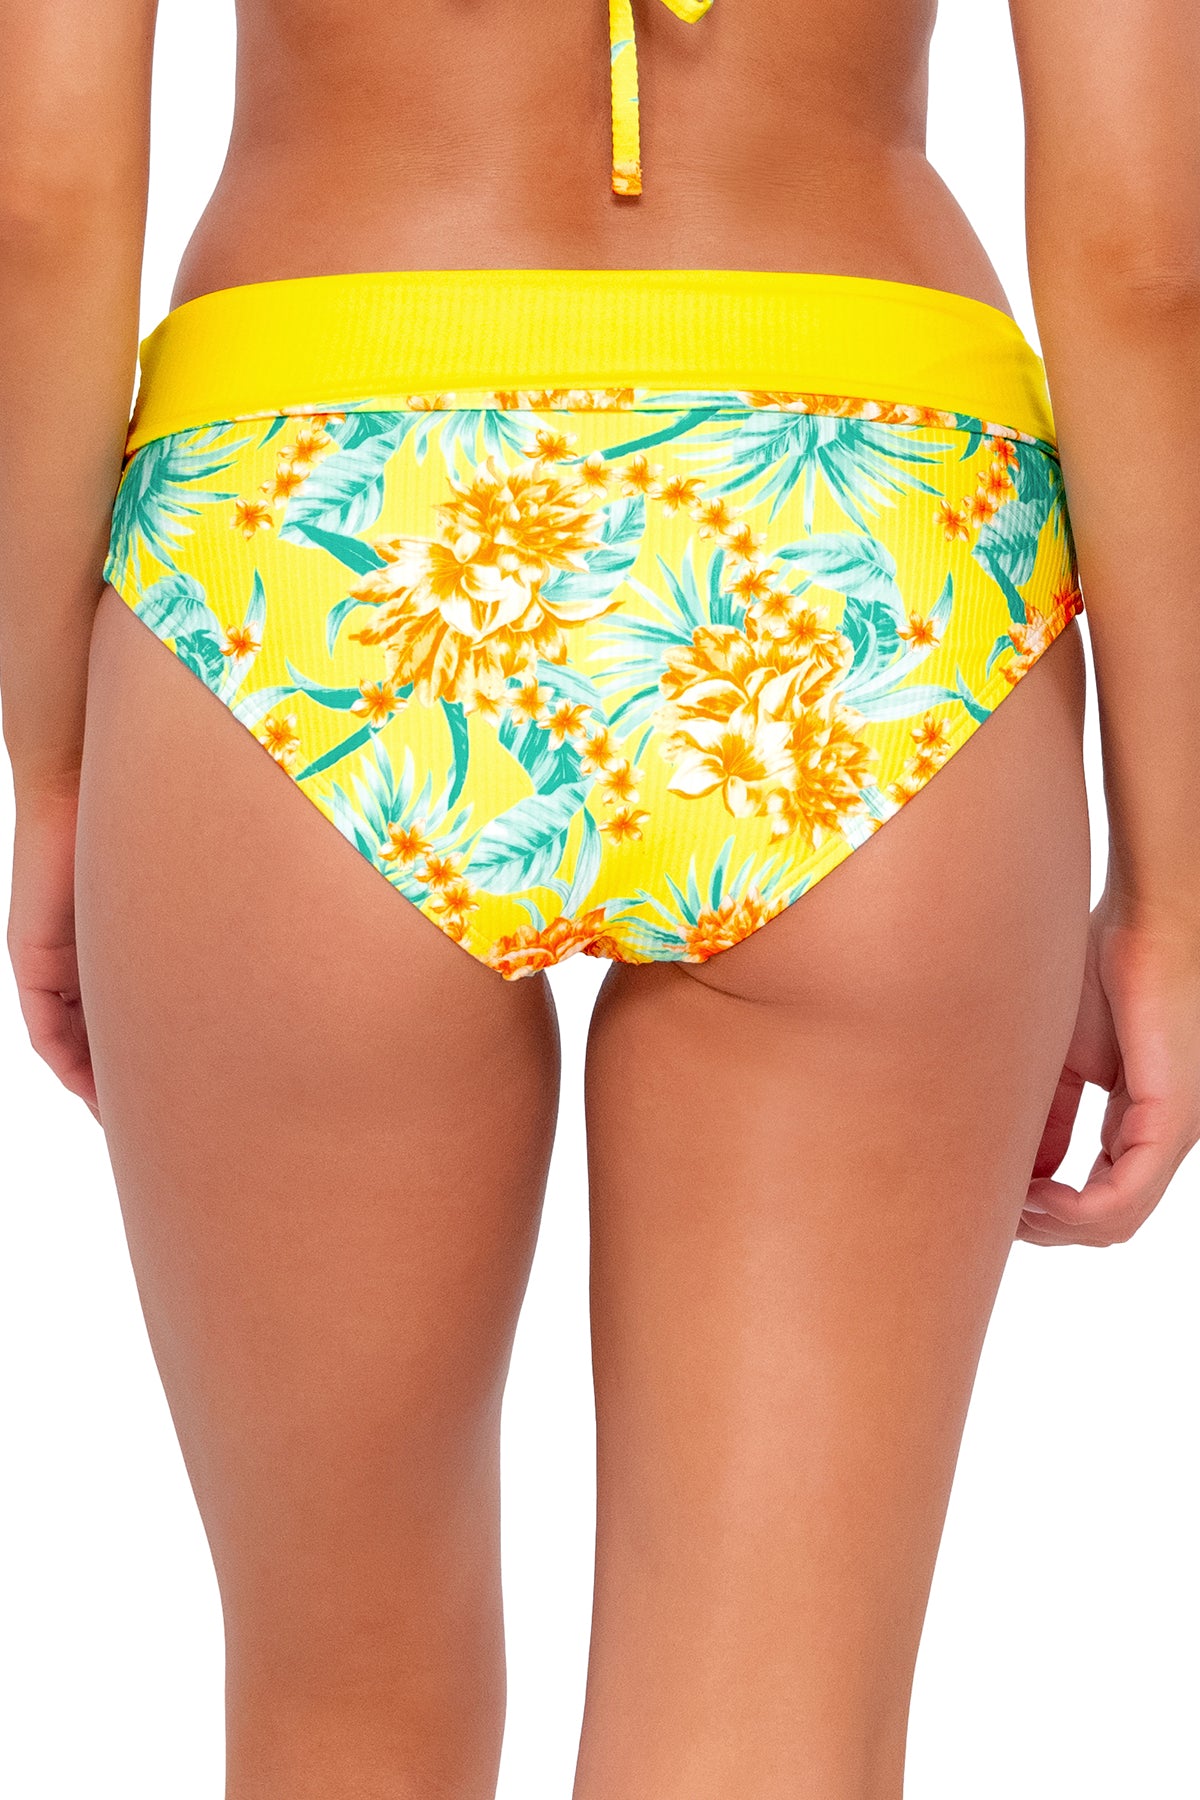 Back pose #1 of Daria wearing Sunsets Golden Tropics Sandbar Rib Capri High Waist Bottom showing folded waist .